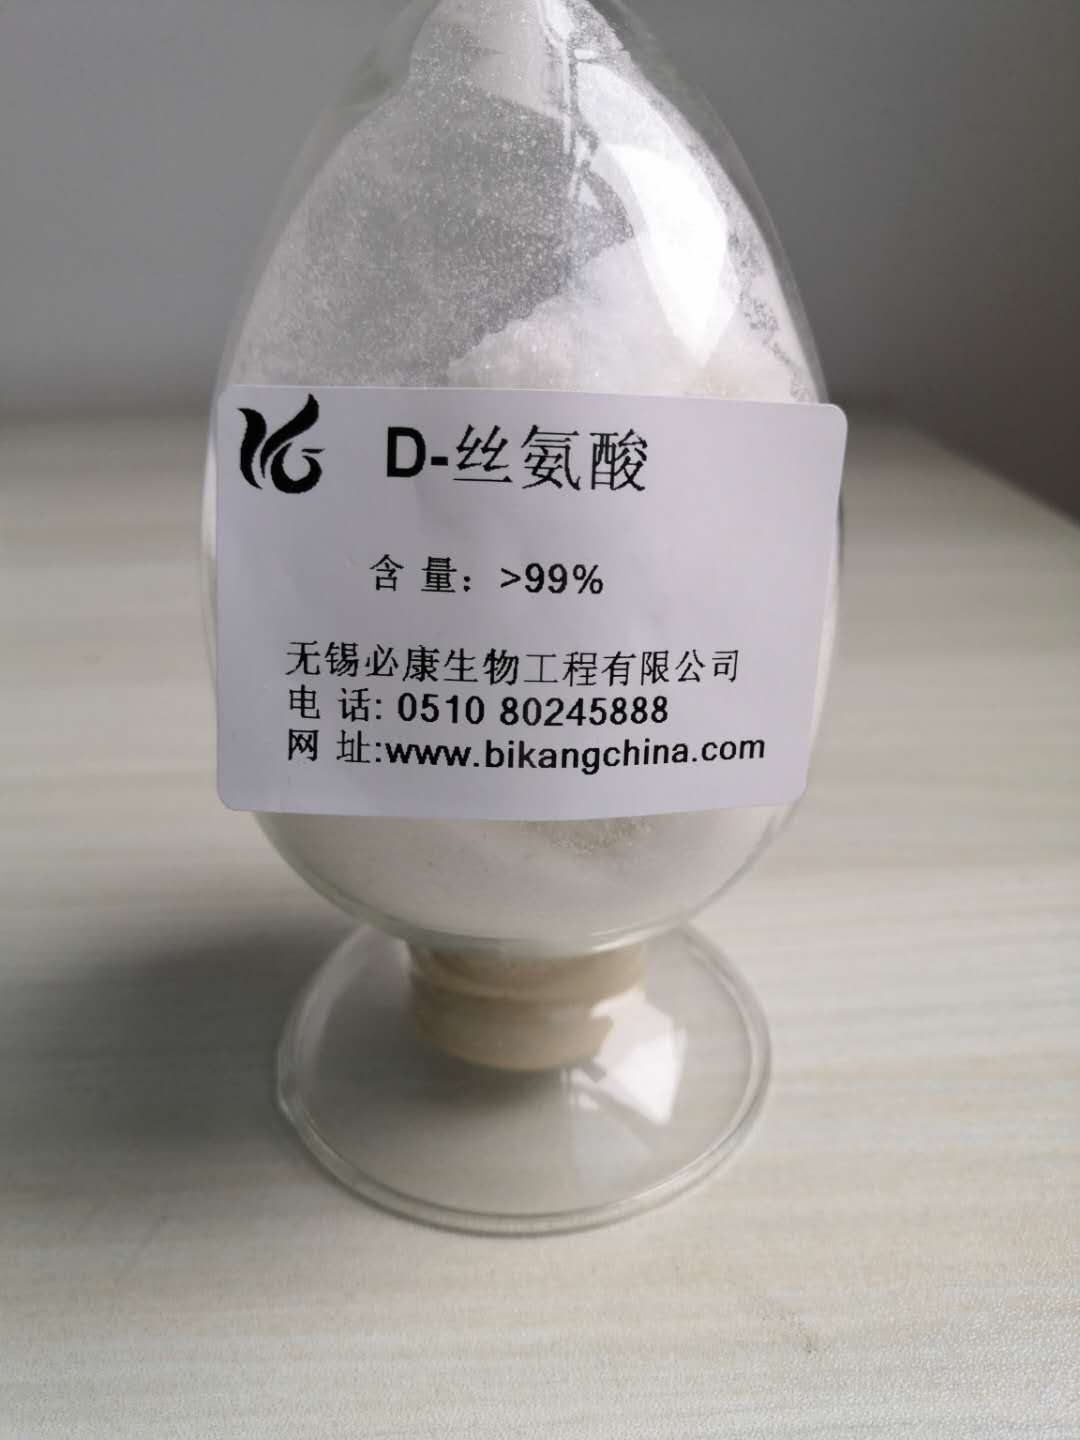 D-丝氨酸 产品图片